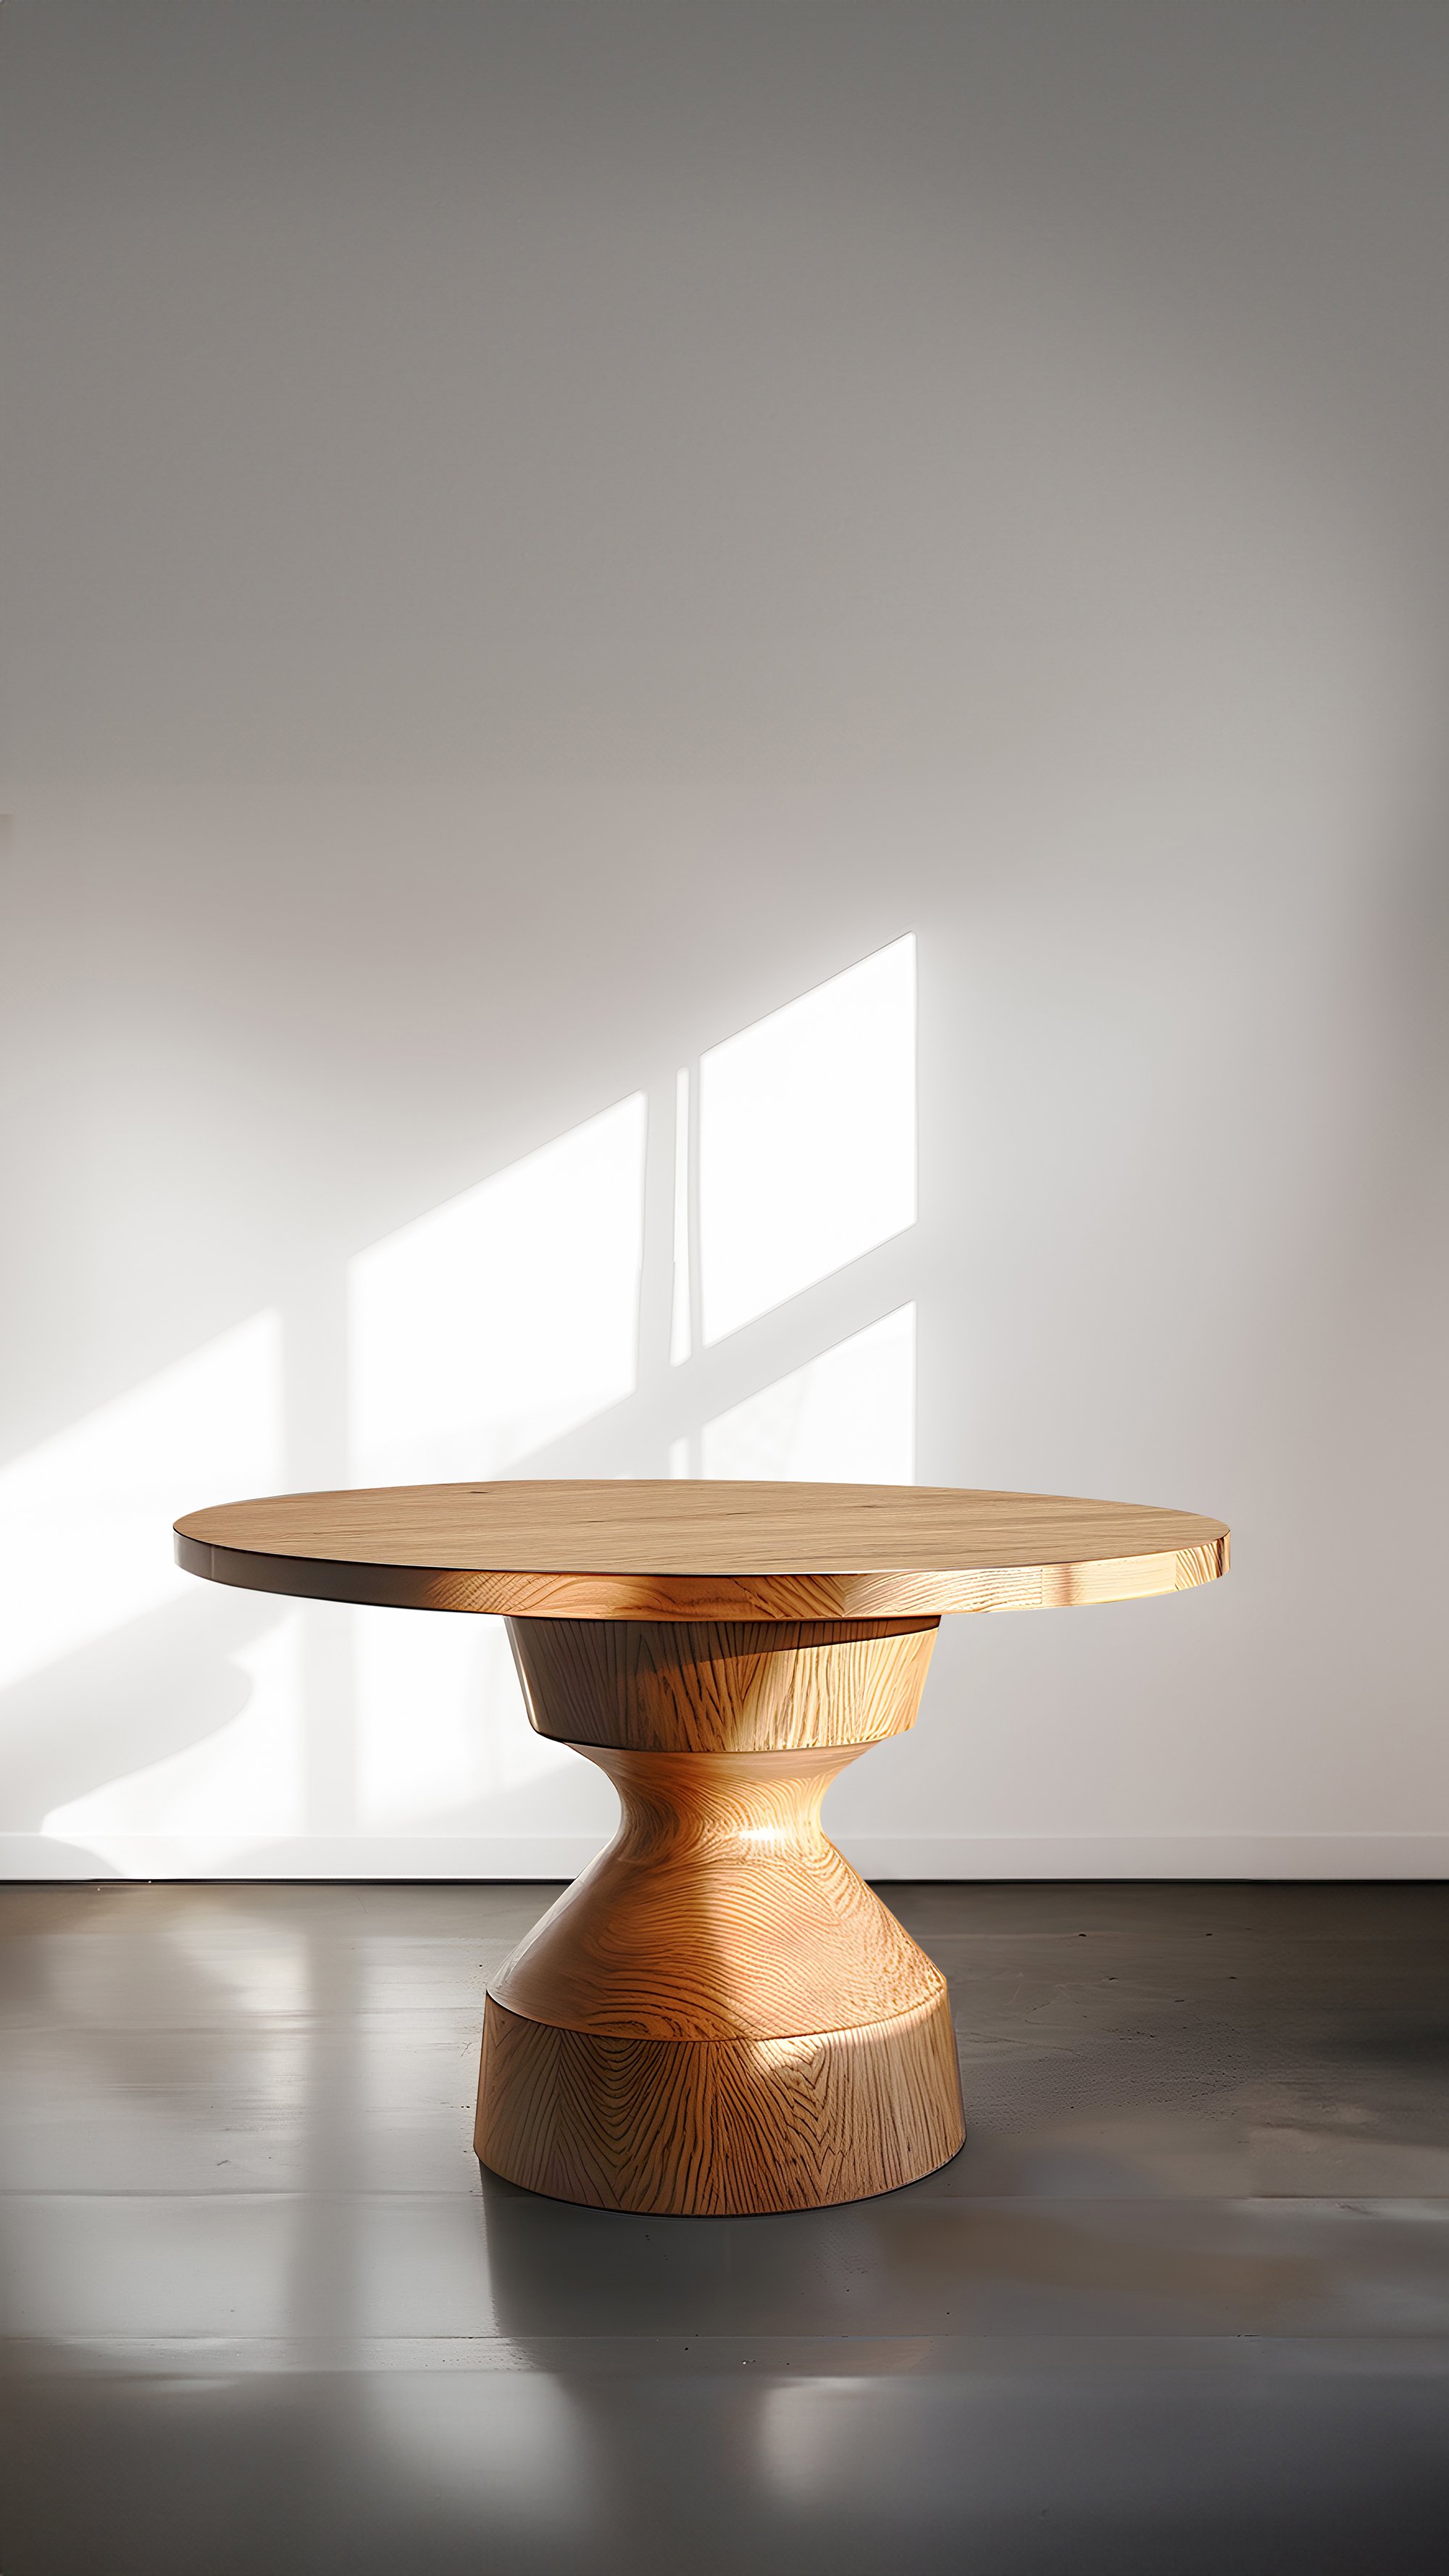 Socle by Joel Escalona, Conference Tables, Design Meets Function No19 - 4.jpg